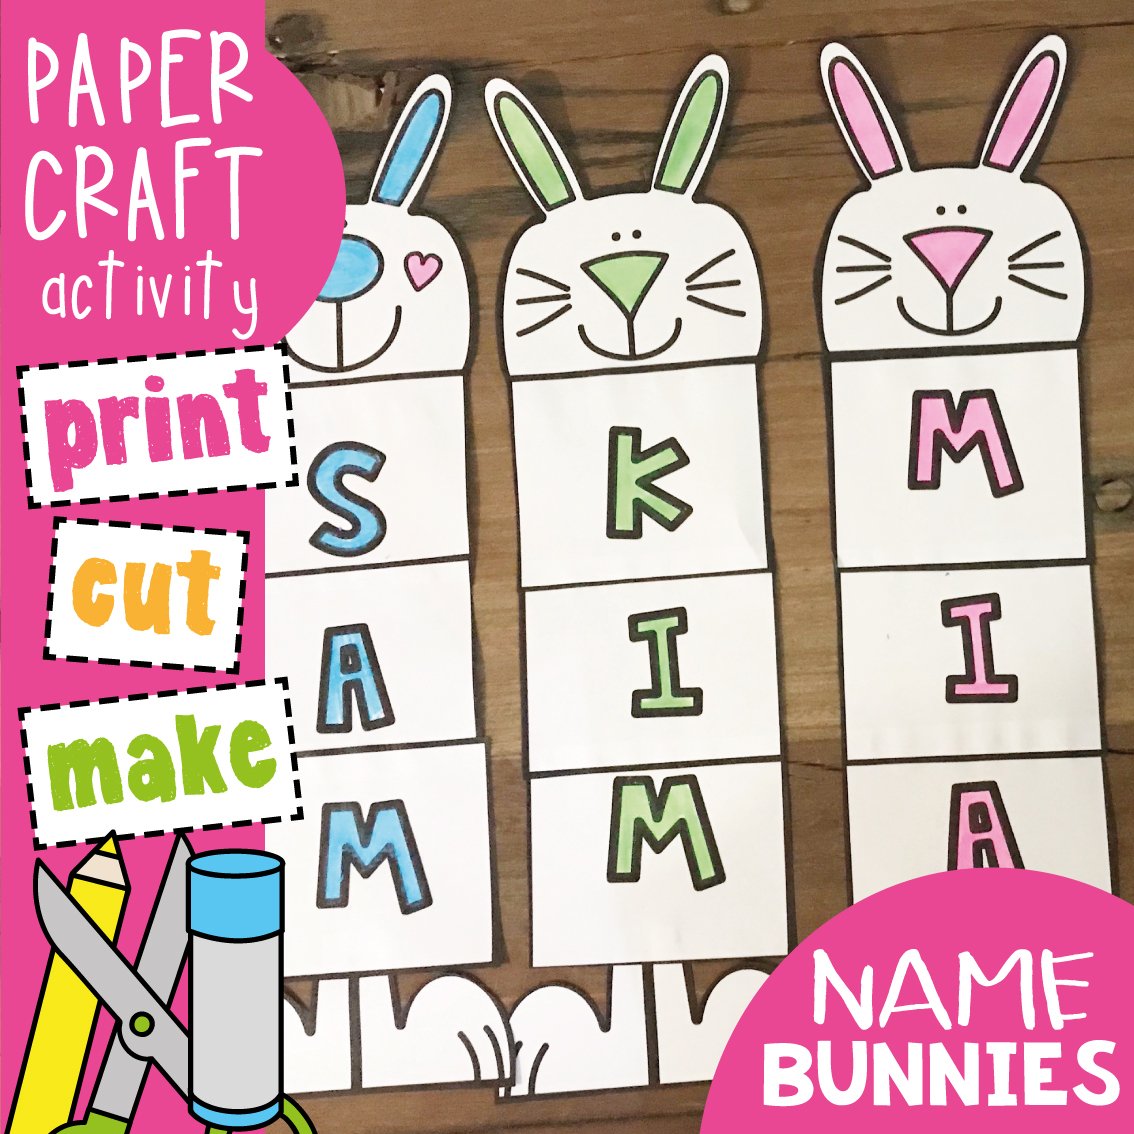 name-bunnies-pic.jpg